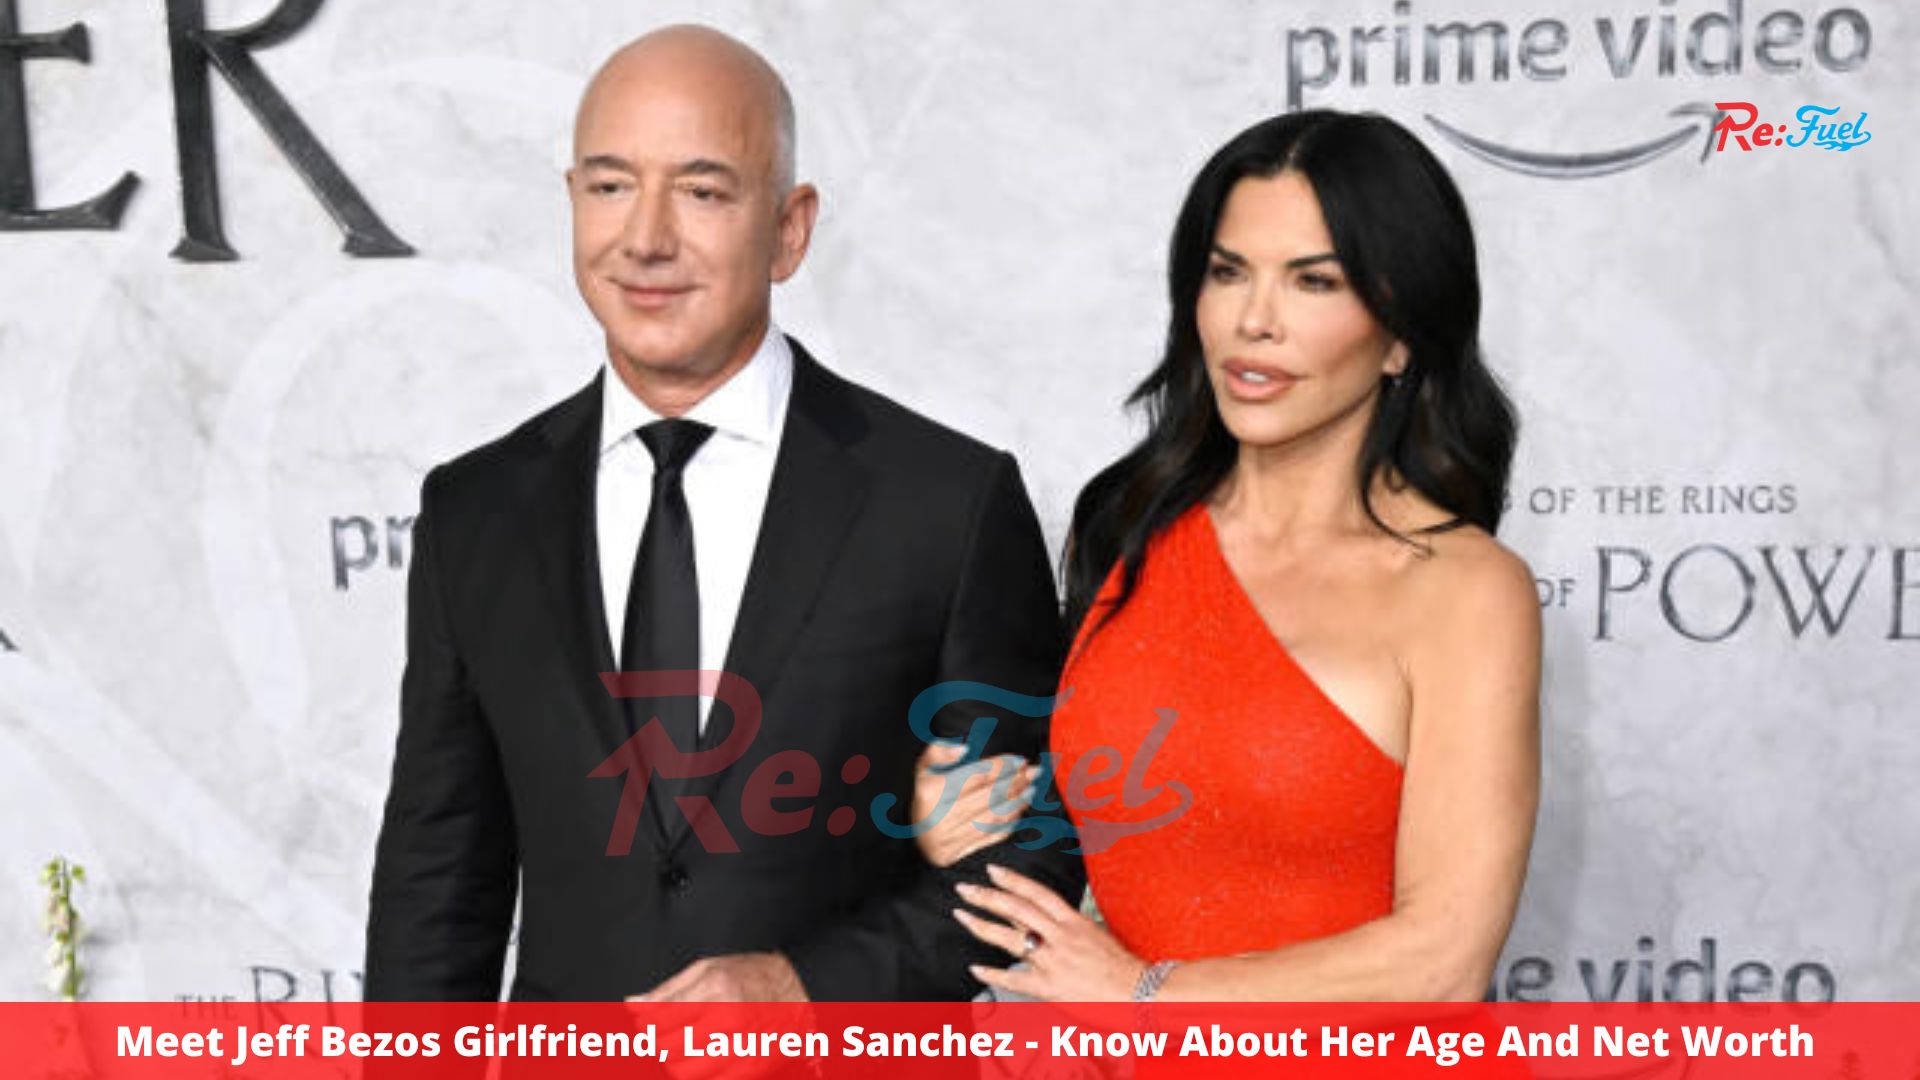 Meet Jeff Bezos Girlfriend, Lauren Sanchez - Know About Her Age And Net Worth